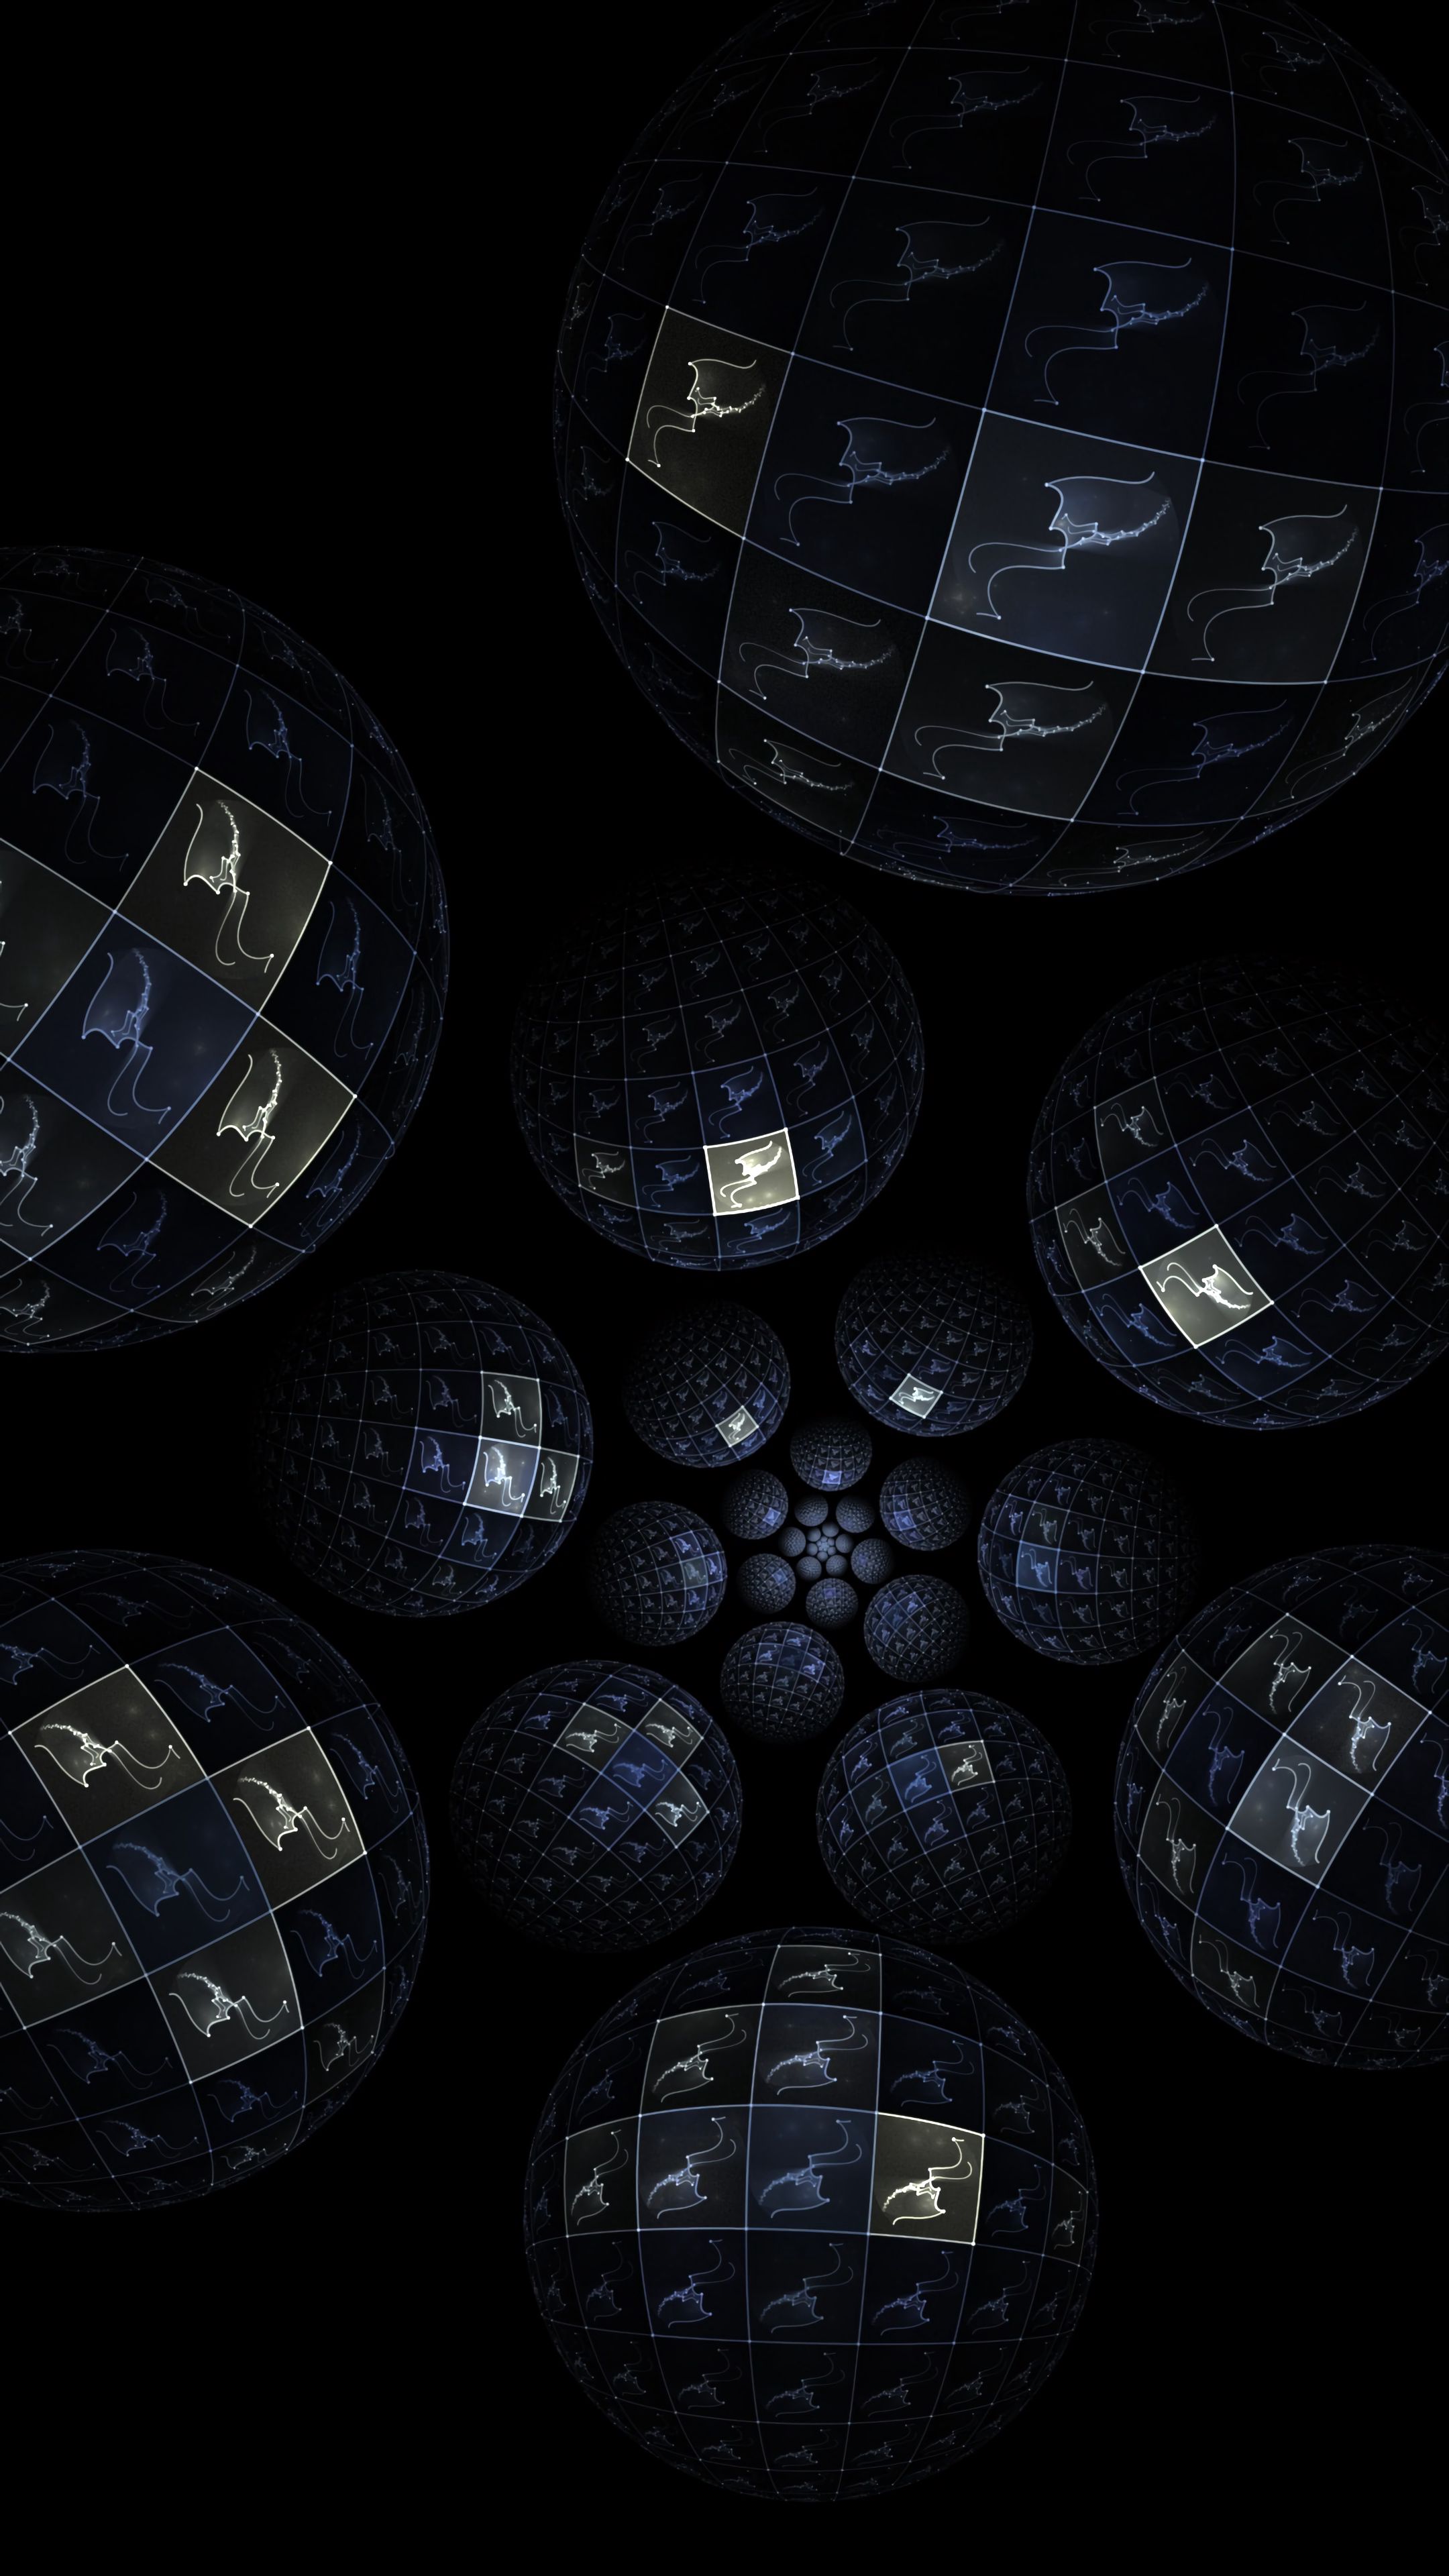 dark, fractal, immersion, abstract, patterns, balls